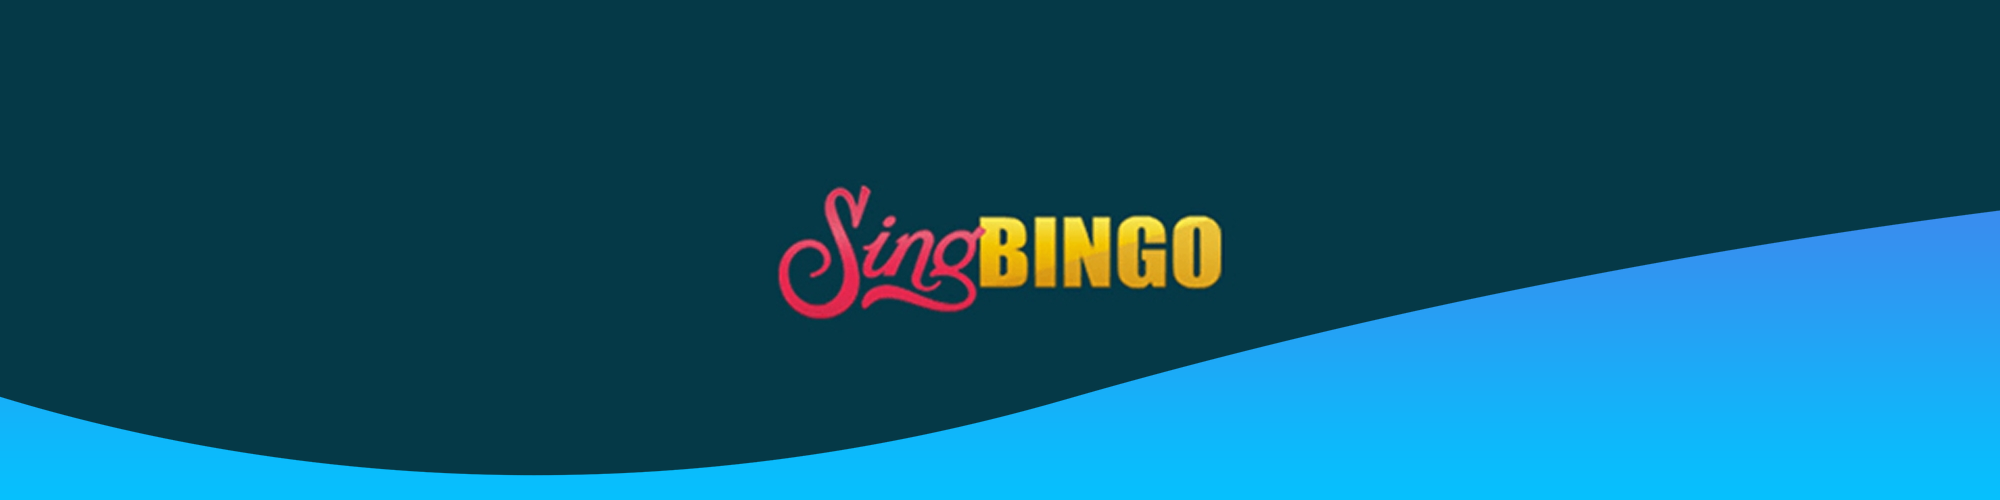 Sing Bingo Alternative on EazeGames